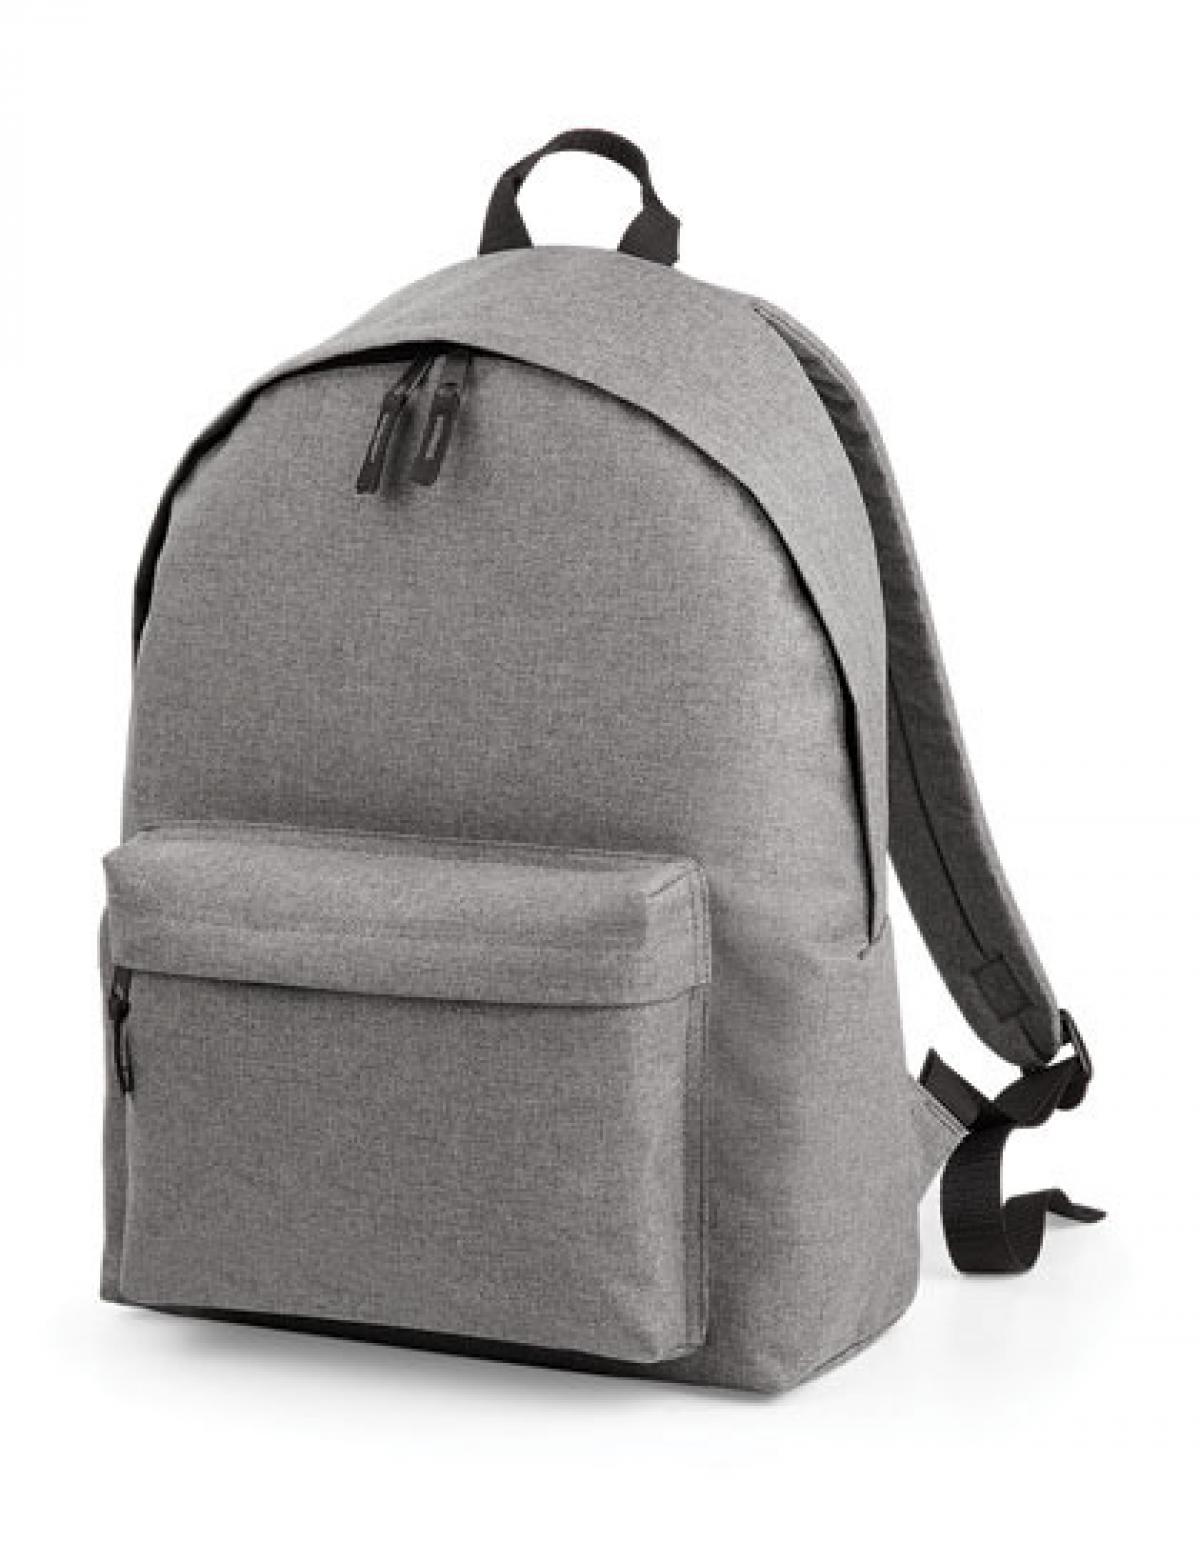 Two-Tone Fashion Backpack Rucksasck31 x 42 x 21 cmBagBase 